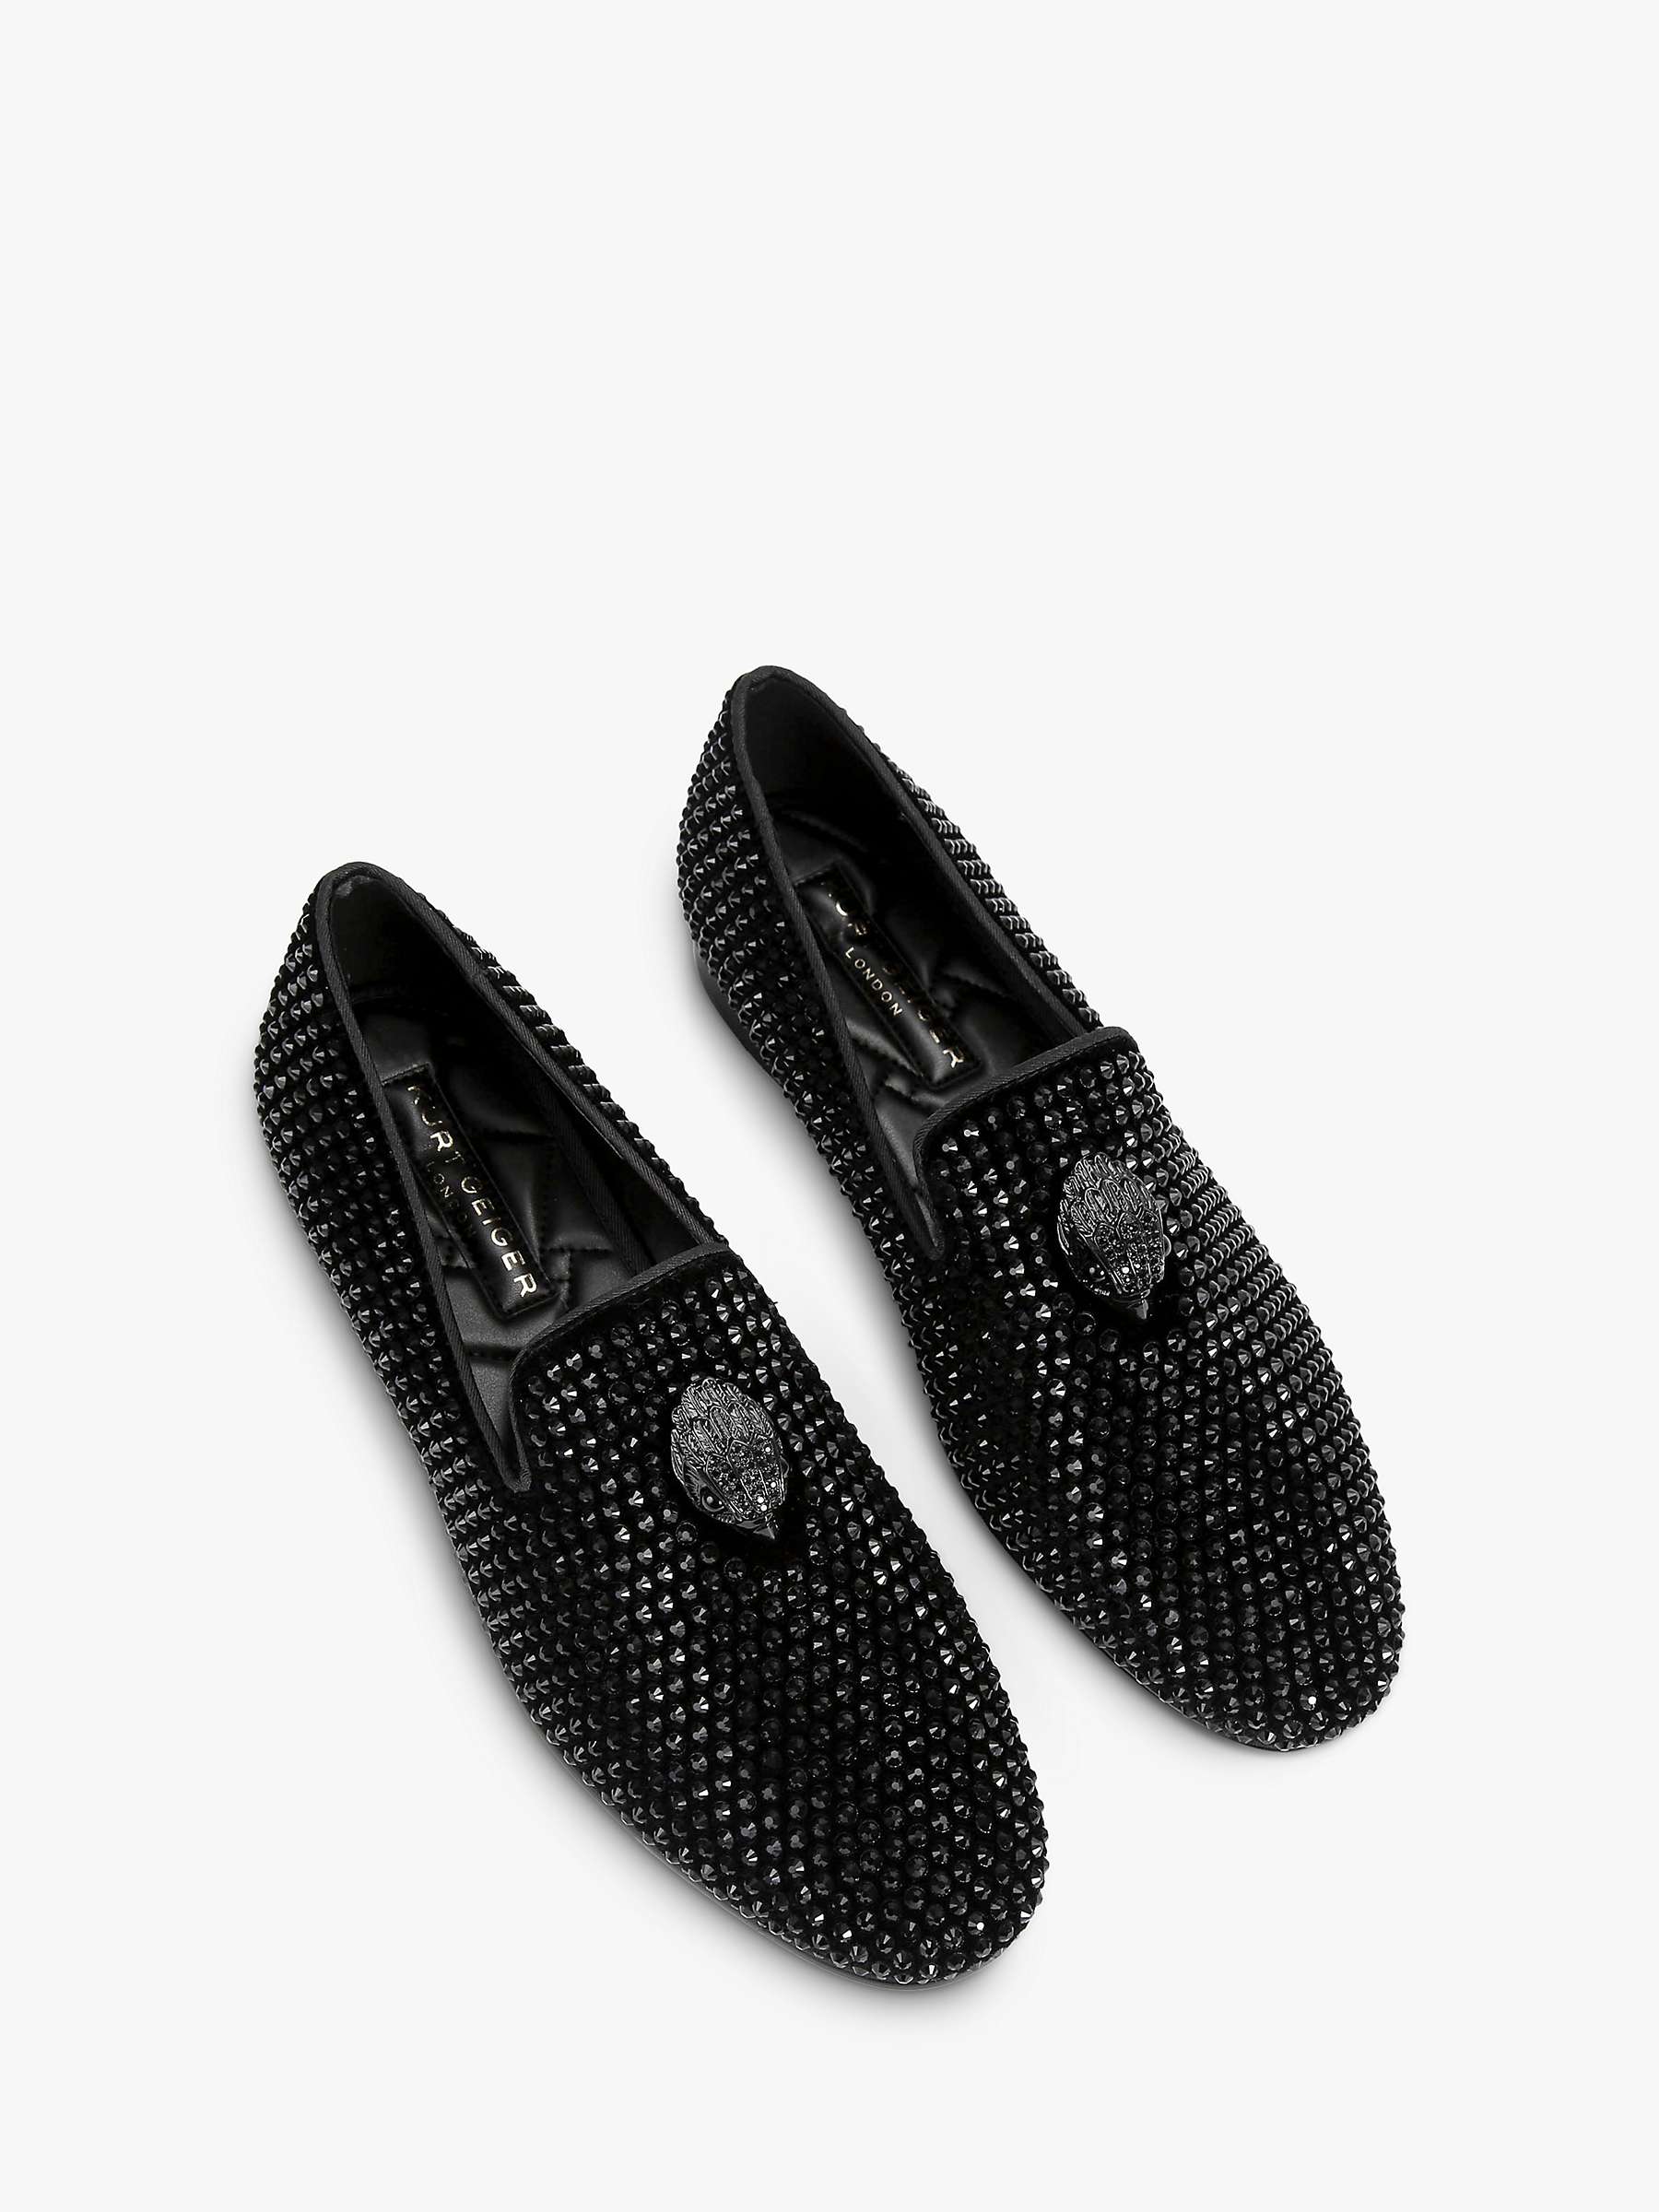 Buy Kurt Geiger London Ace Stud Embellishment Shoes Online at johnlewis.com